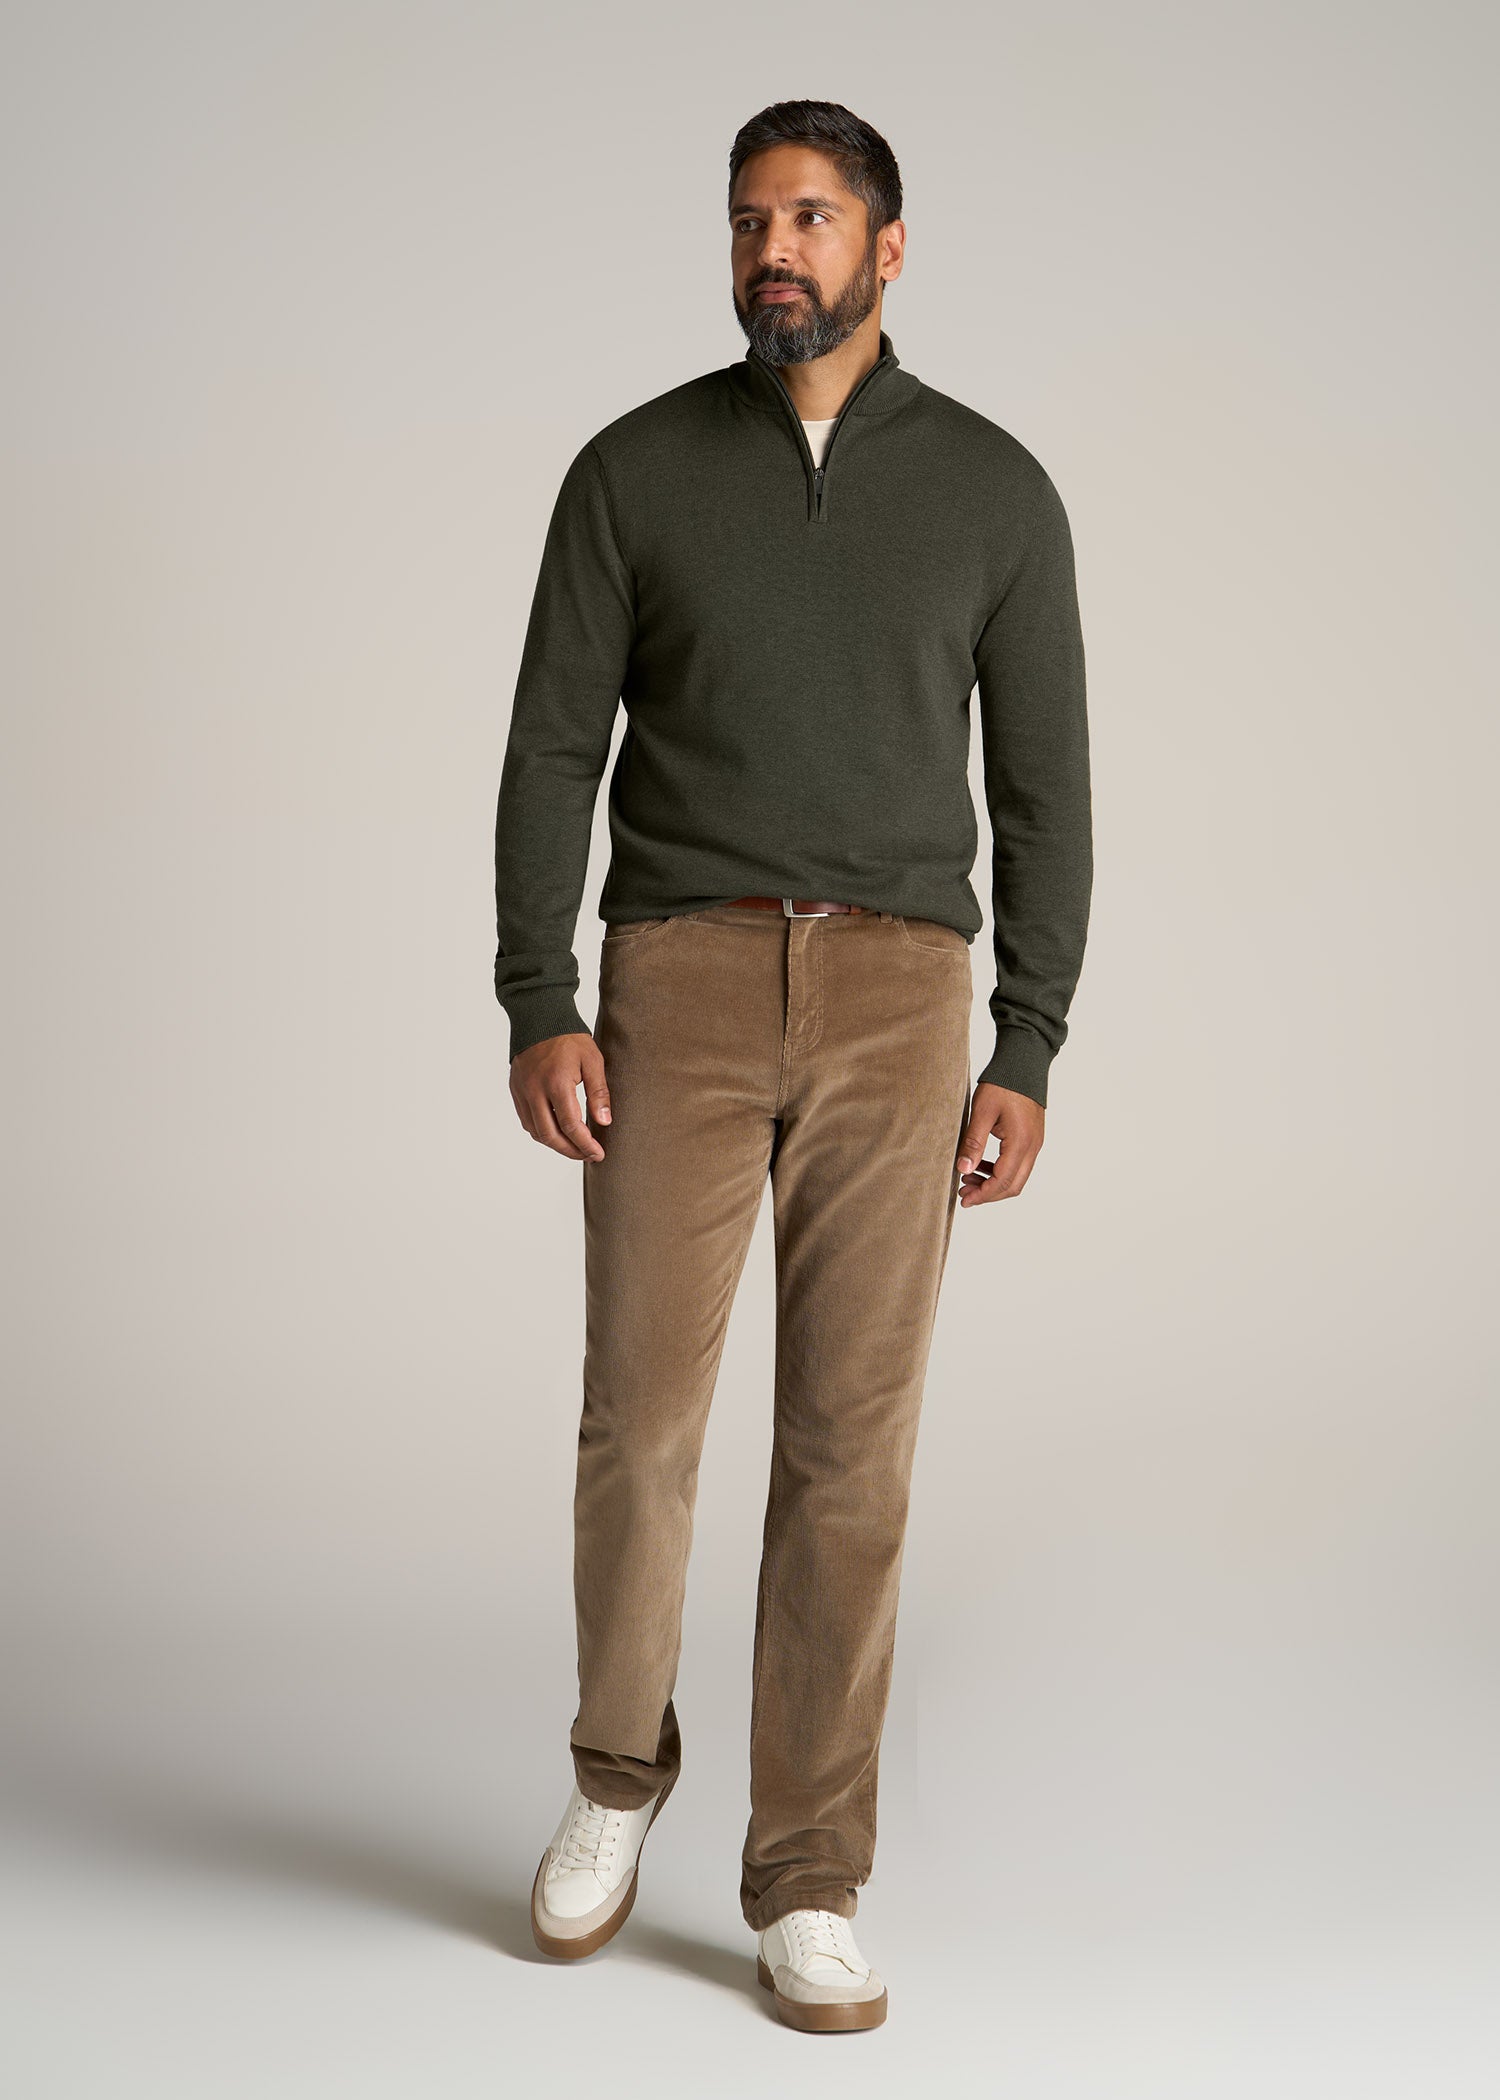 American-Tall-Men-Everyday-Quarter-Zip-Sweater-Dark-Green-Olive-full